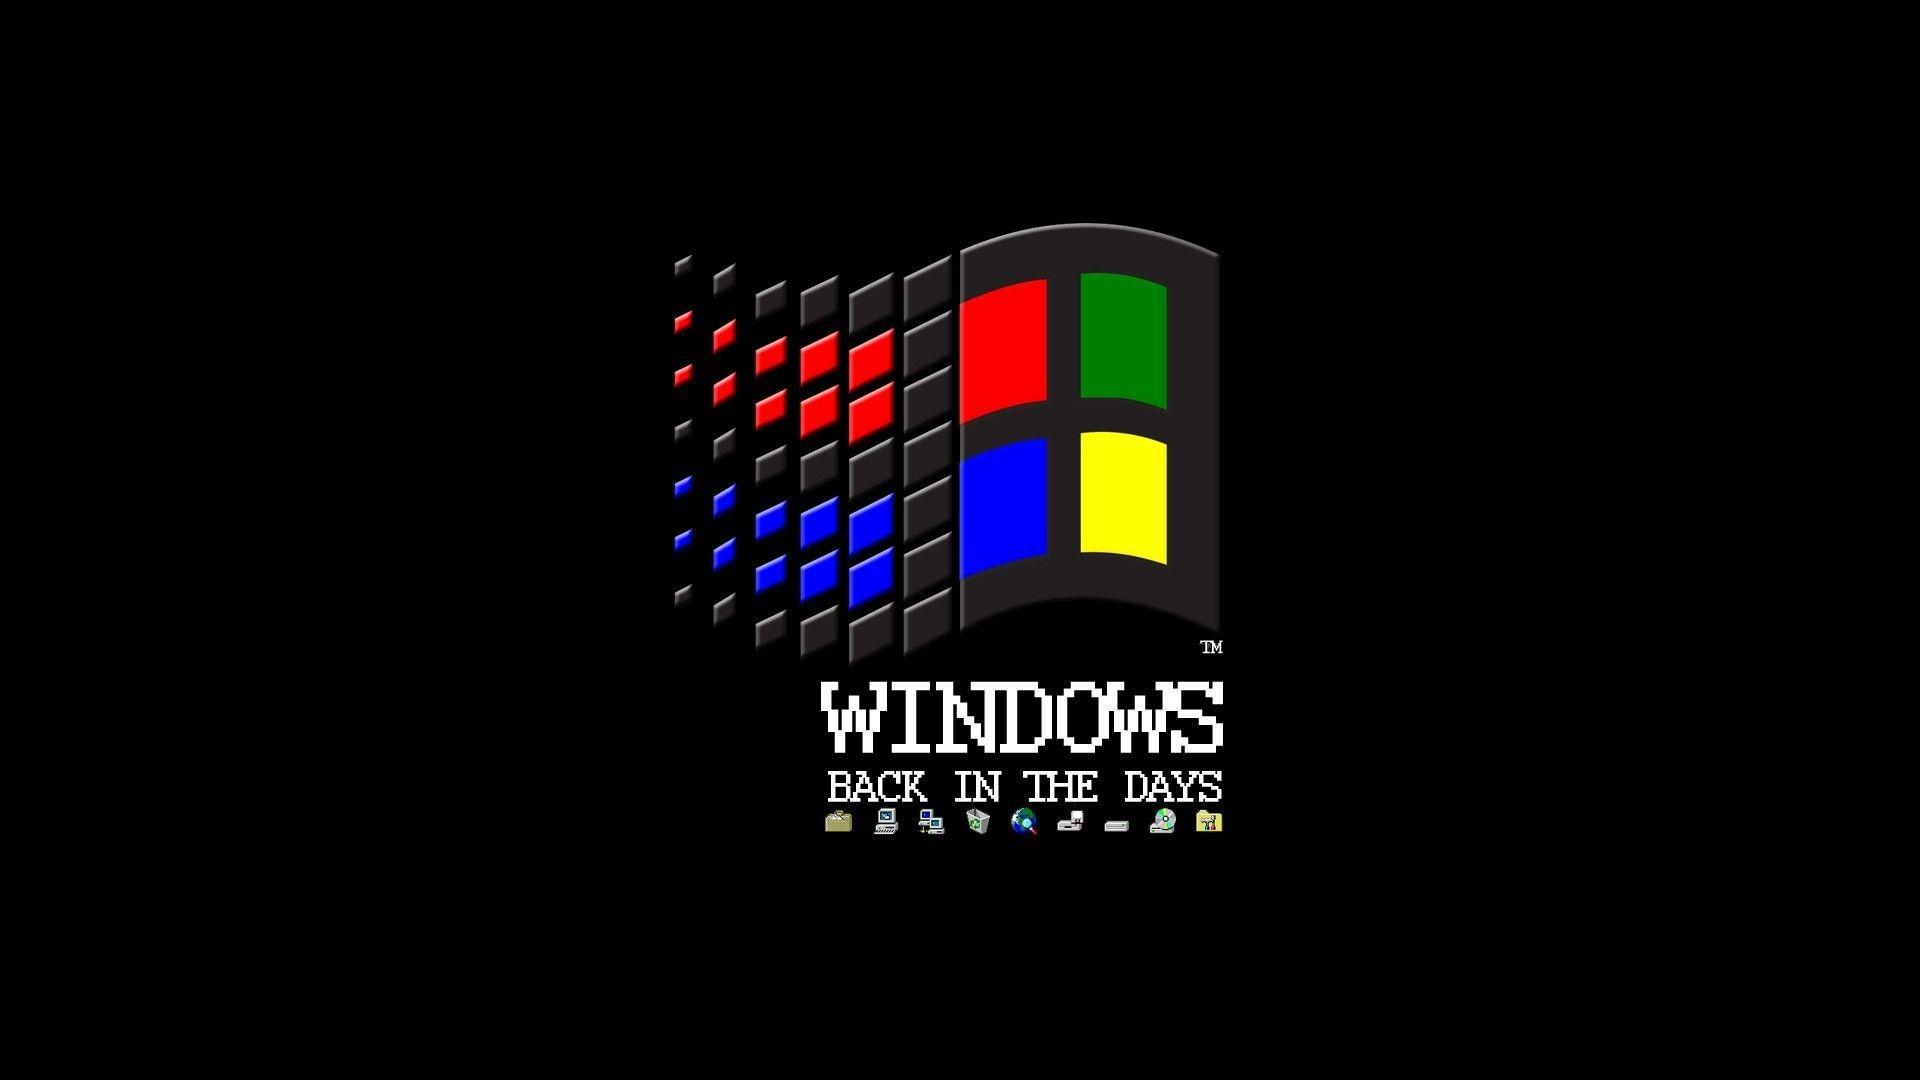 1920x1080 Windows 98 Ở Độ phân giải 1920x1080